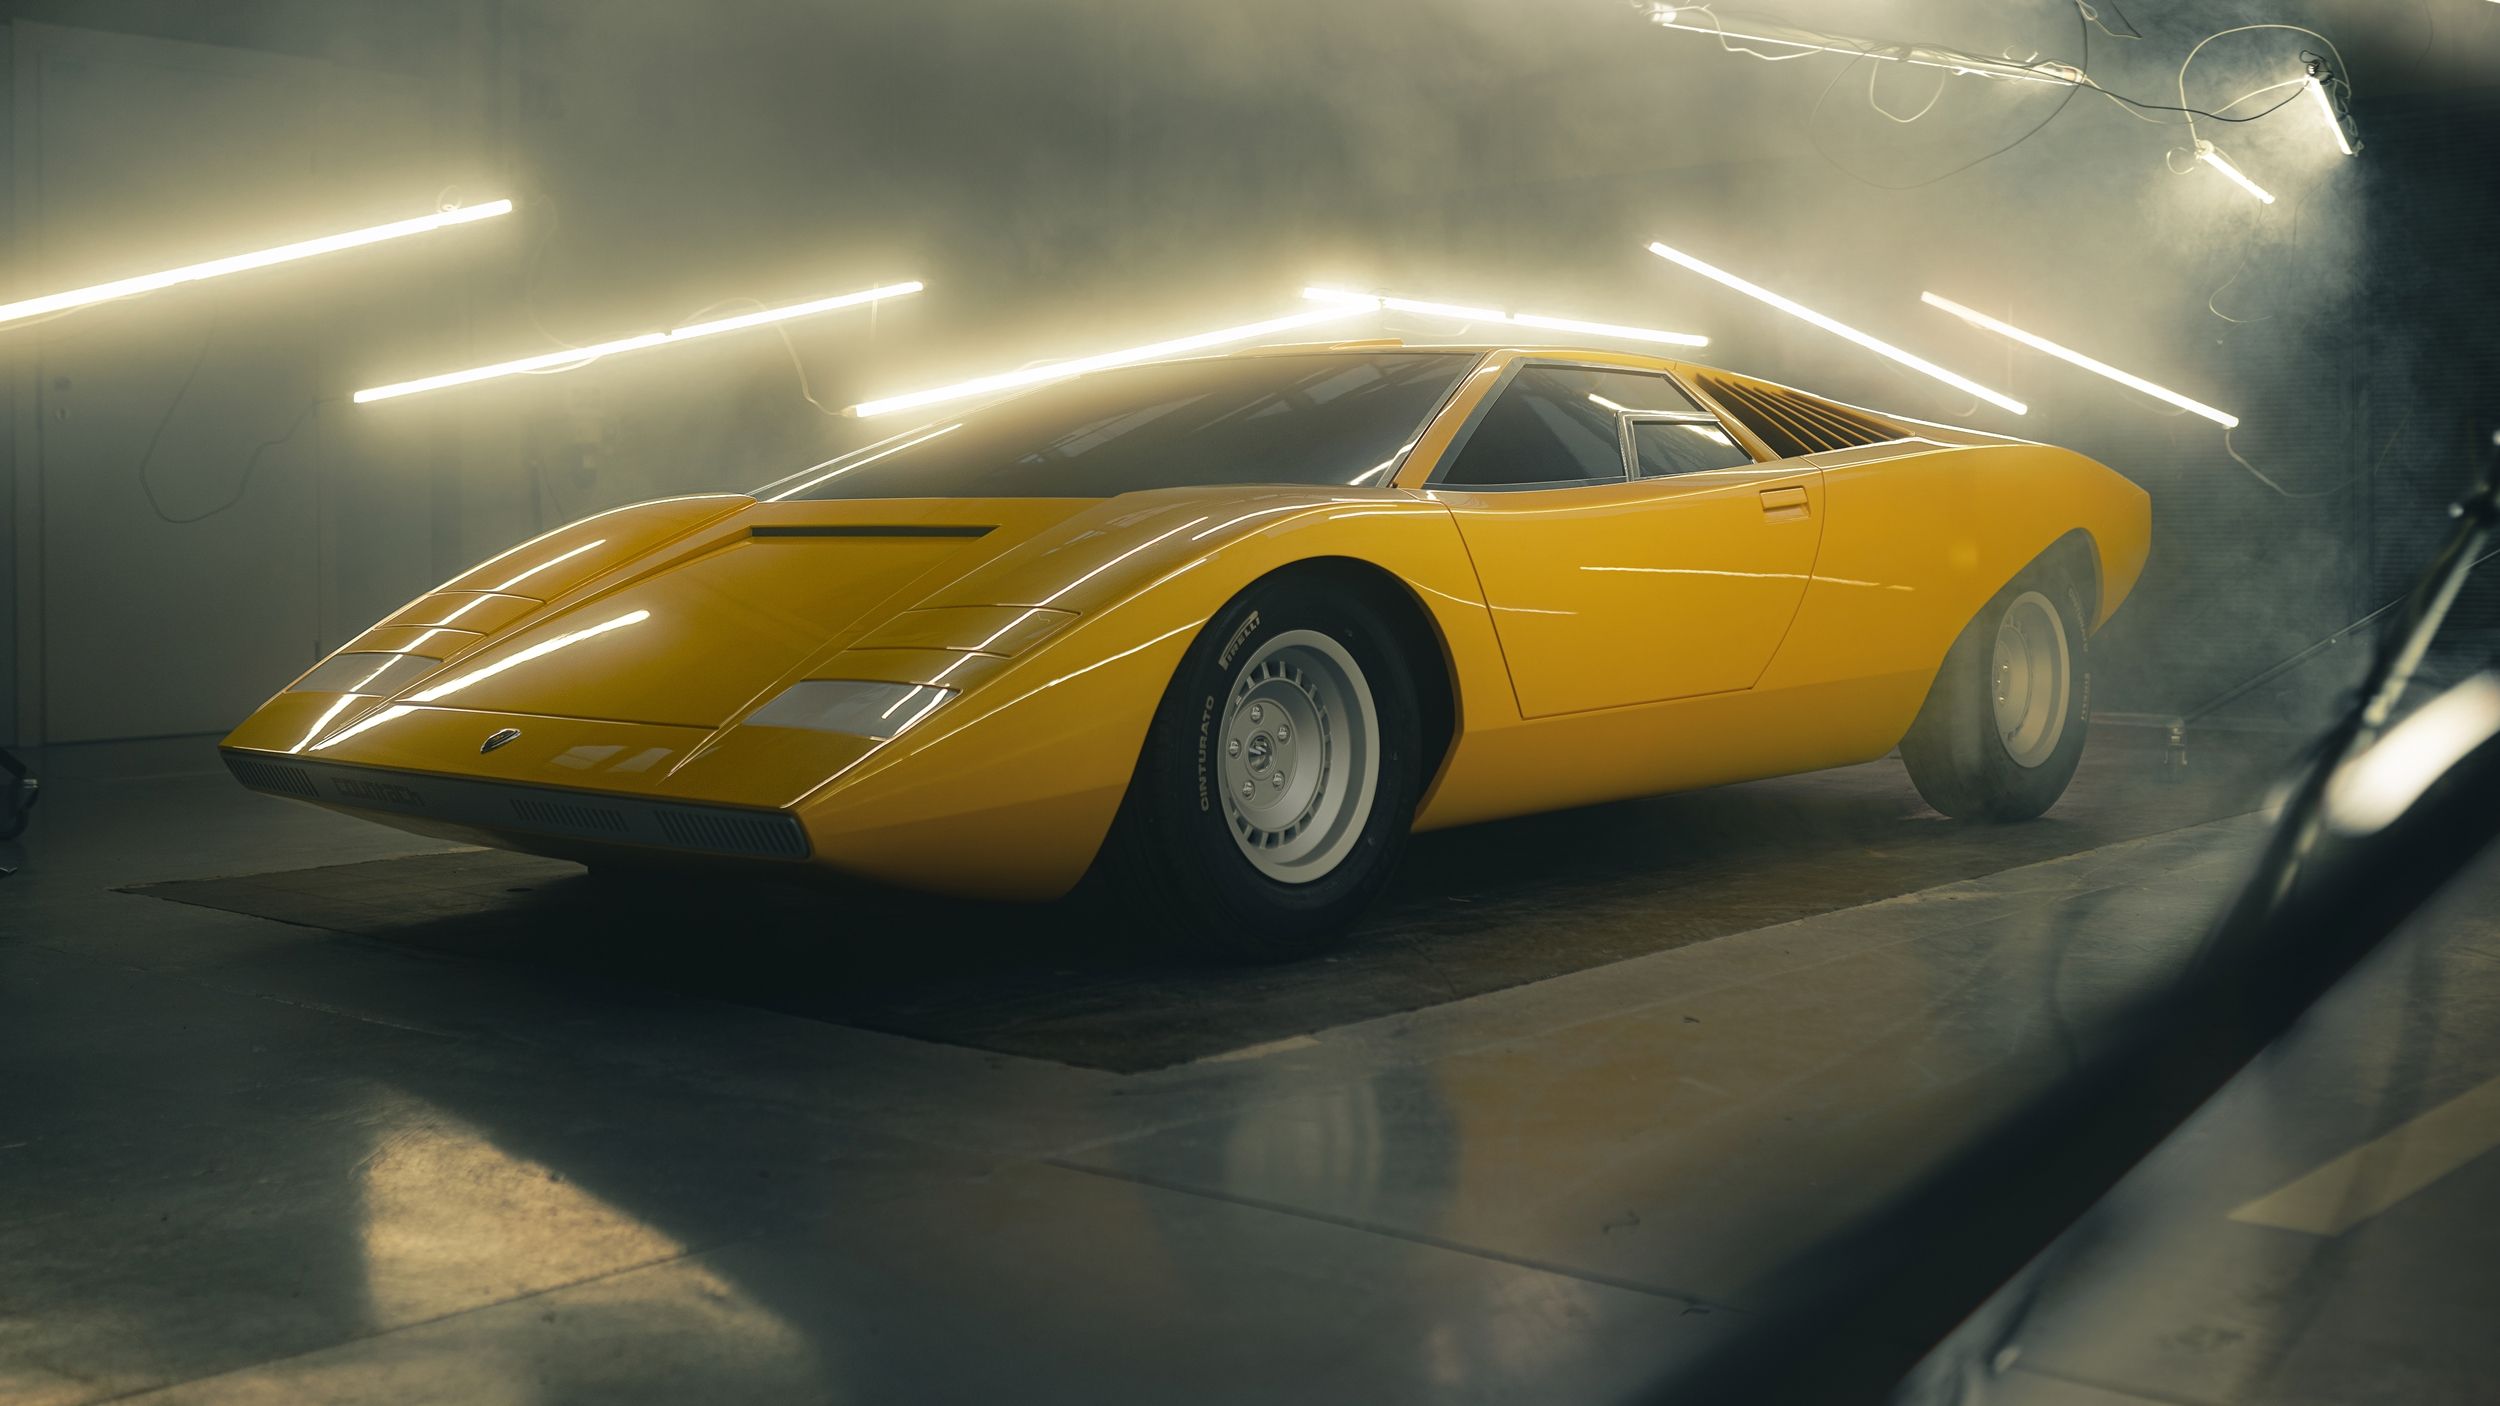 Vuelve a nacer: El Lamborghini Countach LP 500 original ¡está de vuelta!